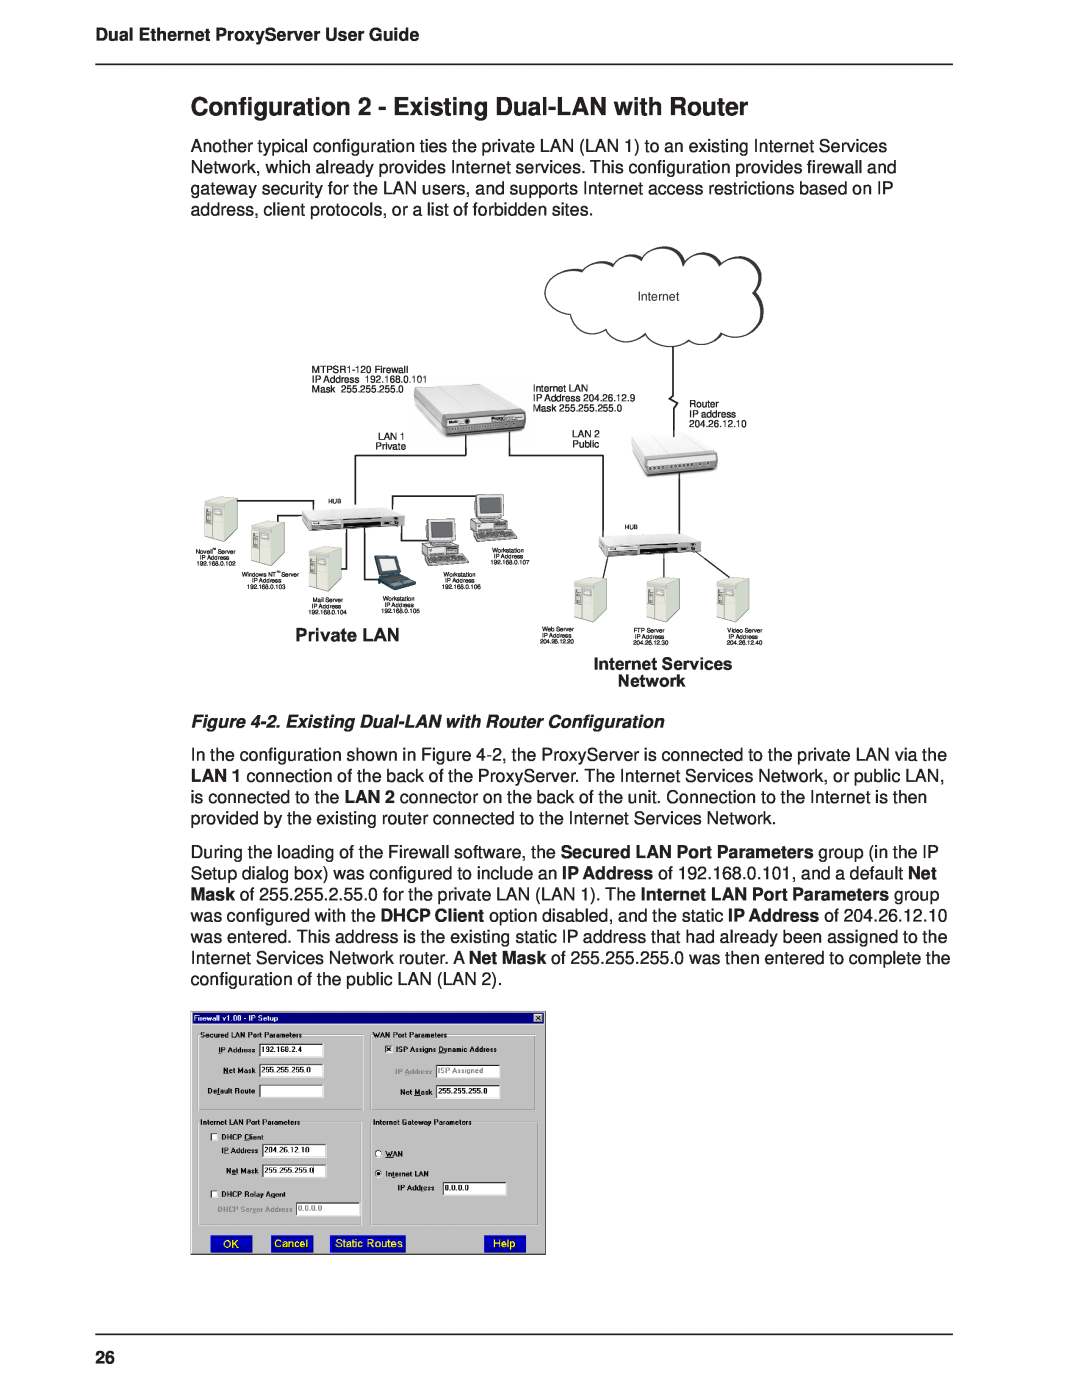 Multitech MTPSR1-120 manual Configuration 2 - Existing Dual-LAN with Router, 2. Existing Dual-LAN with Router Configuration 